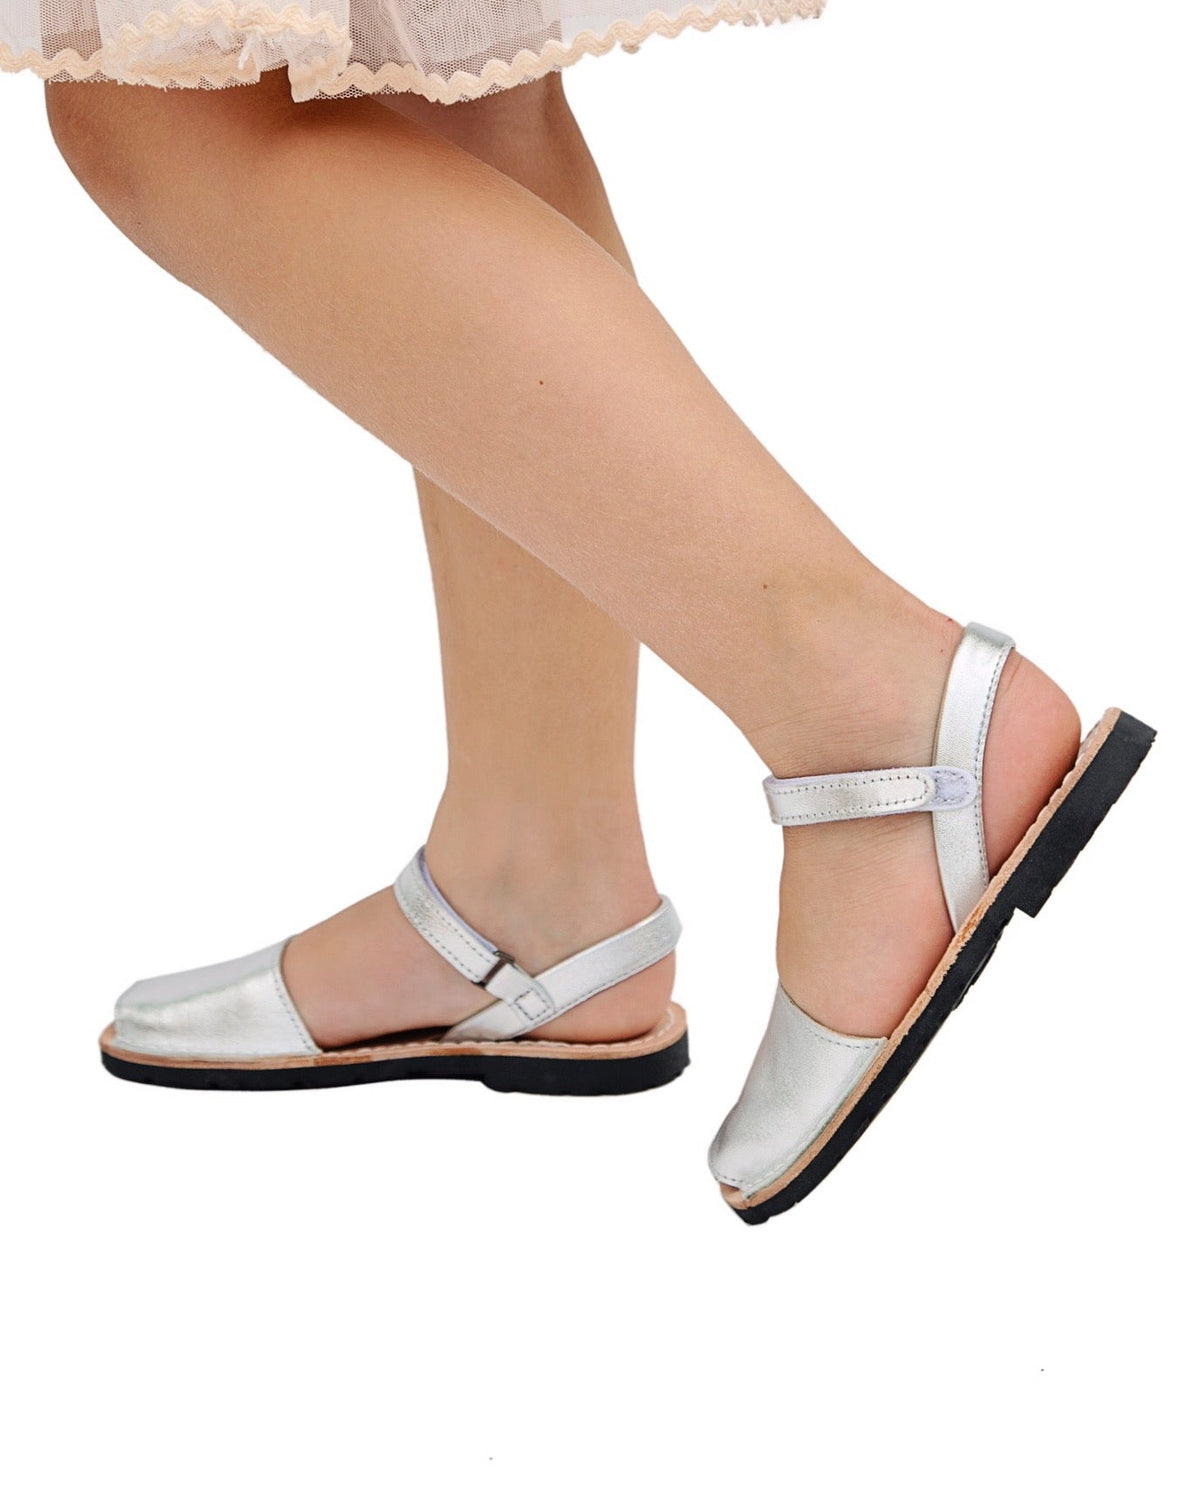 Girls Ankle Strap Avarca in Metallic Silver - Shoeq